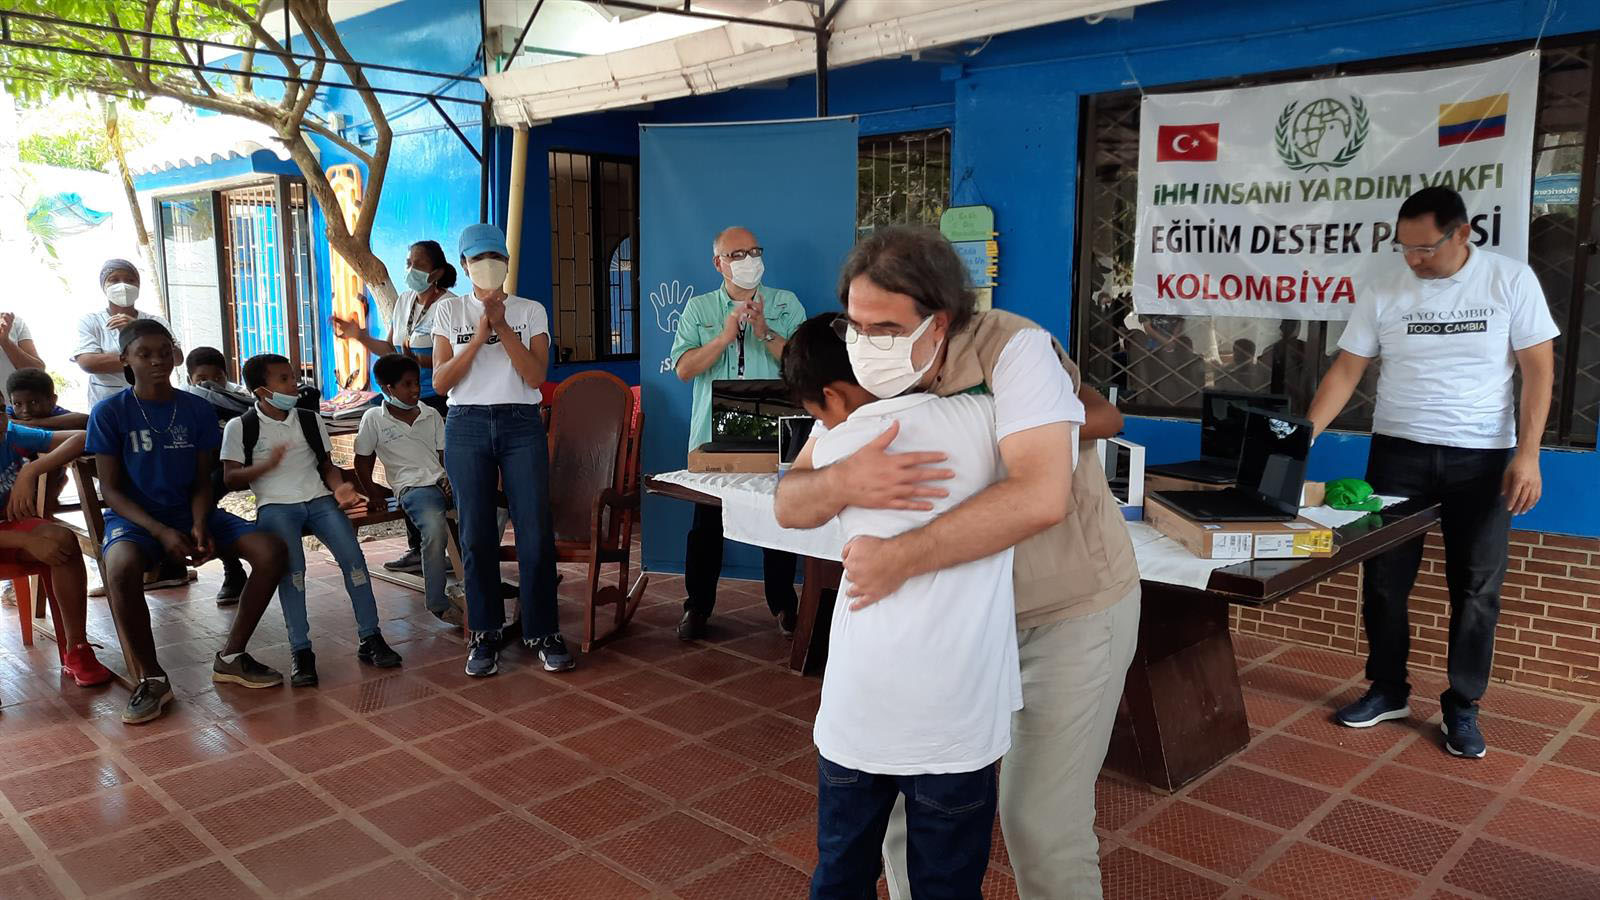 IHH تقدم المساعدات الإنسانية لكولومبيا